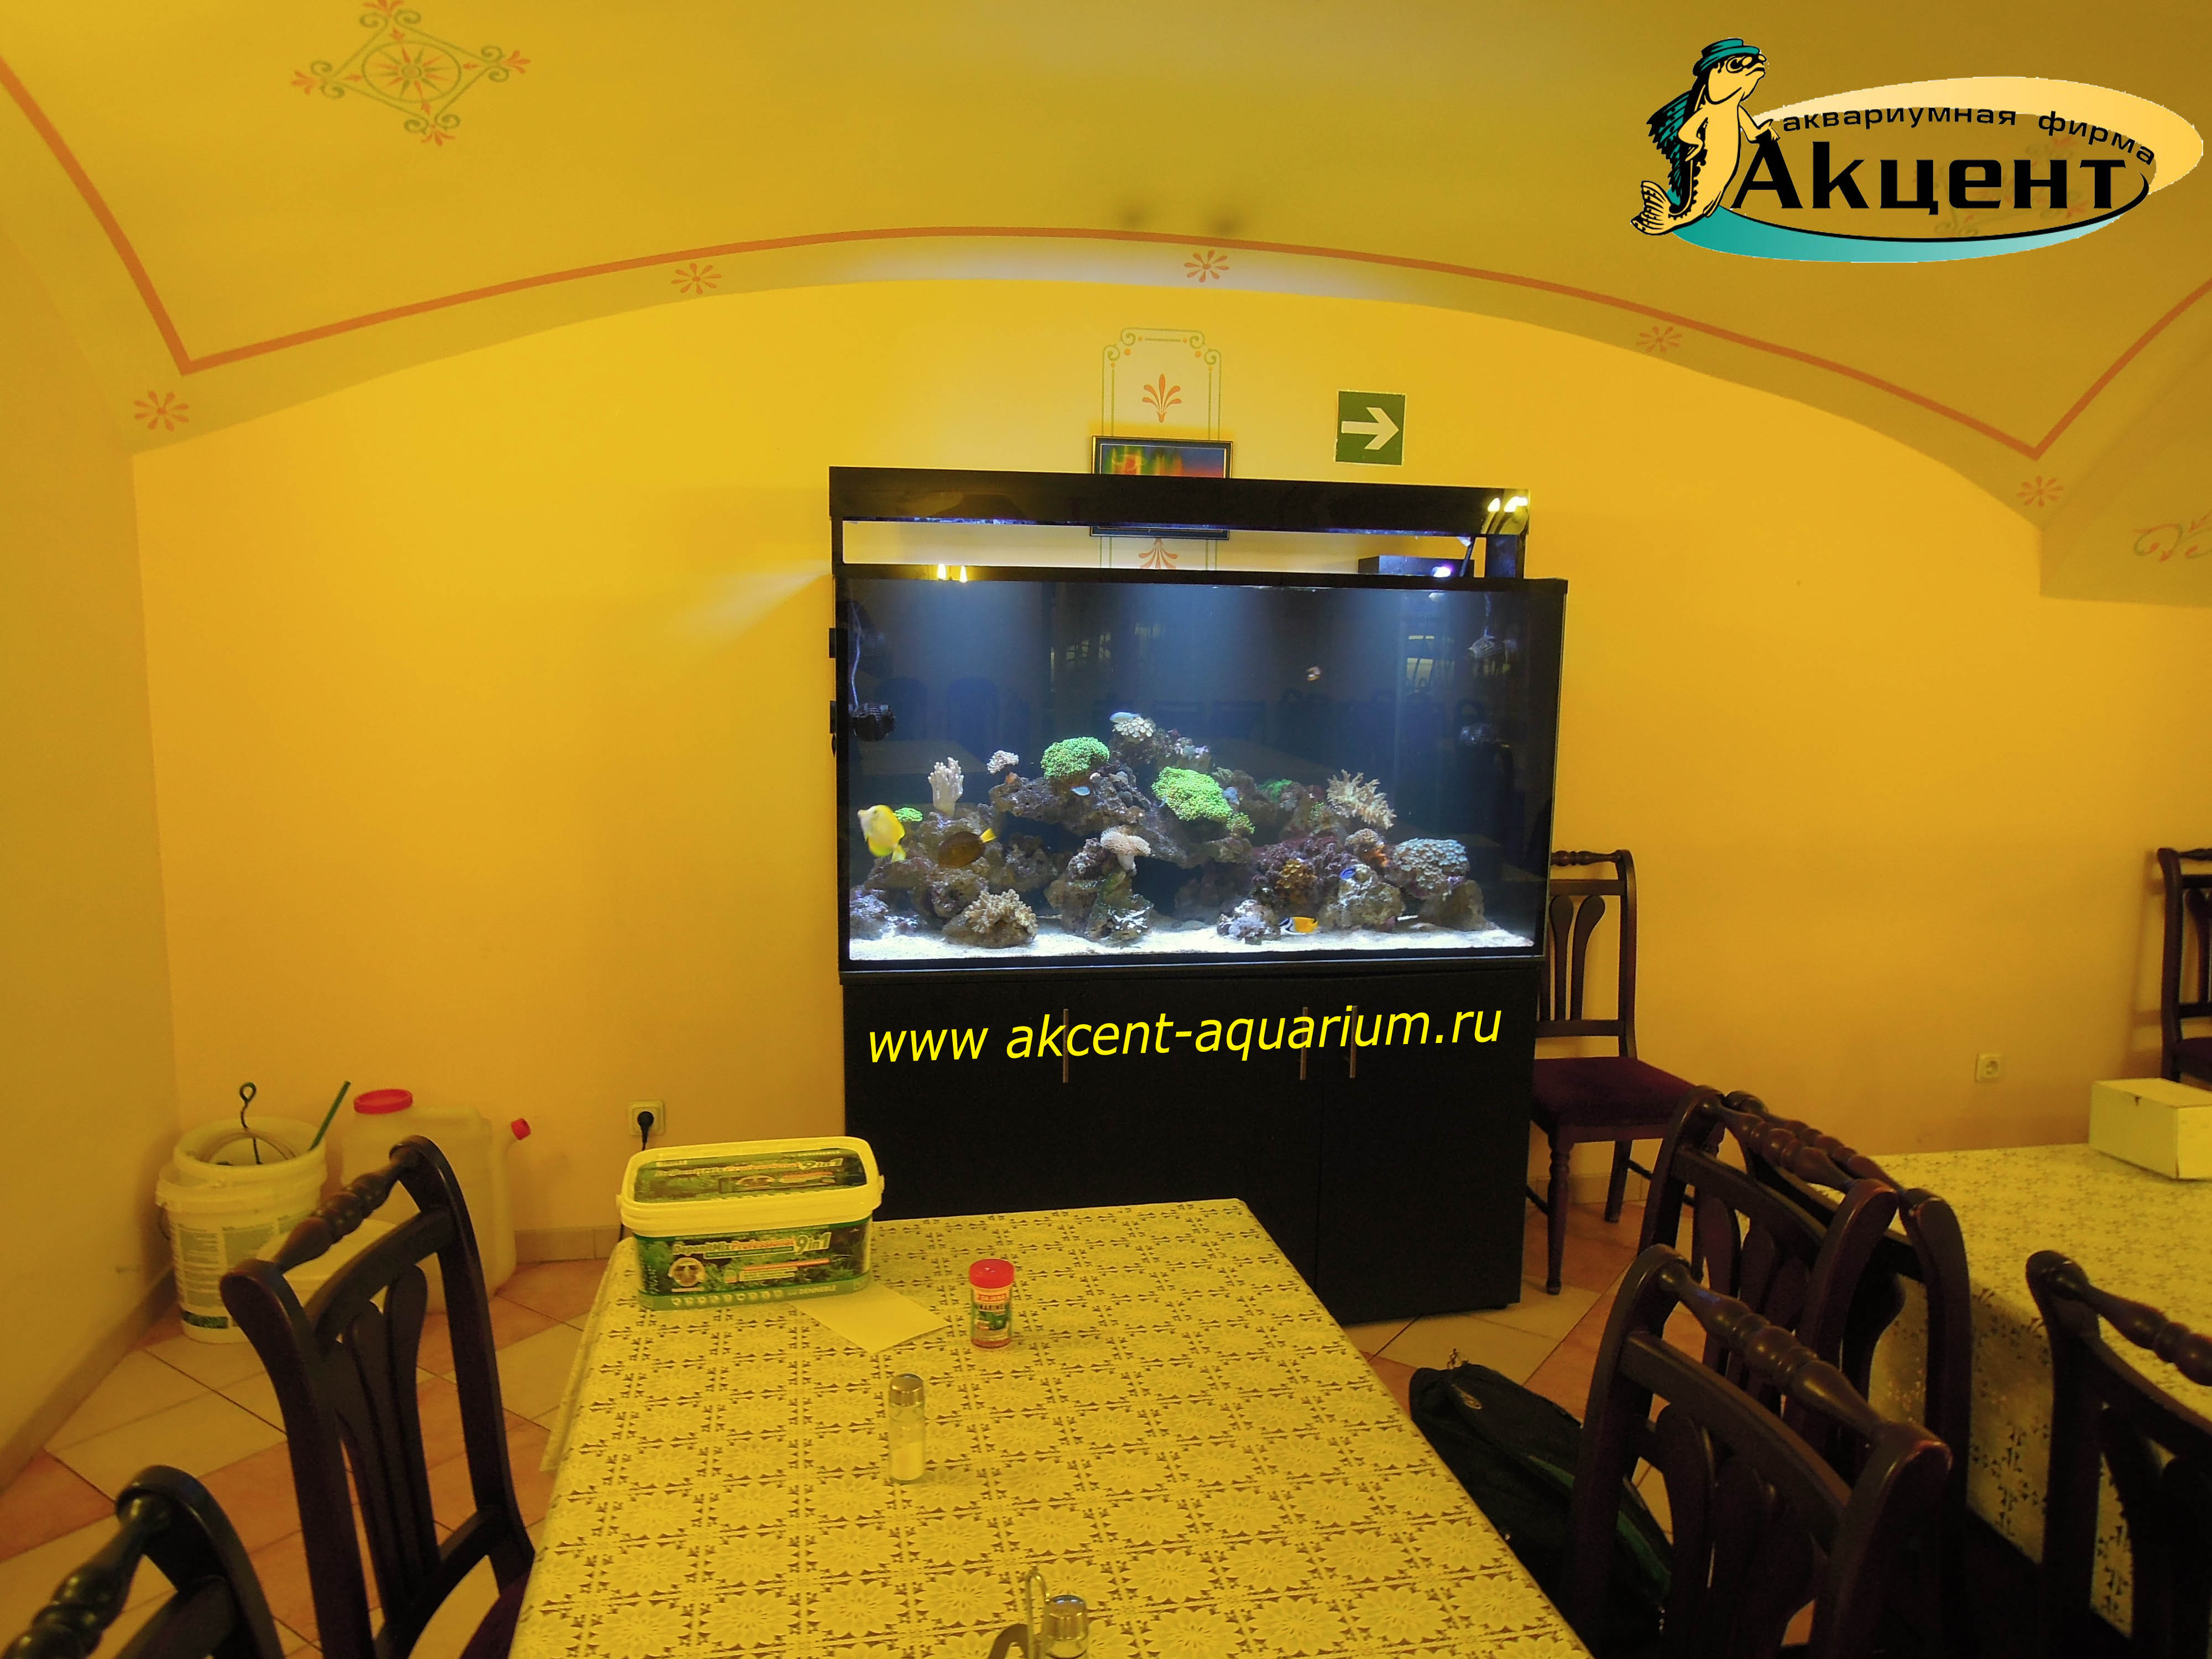 Акцент-аквариум морской рифовый аквариум 800 литро 